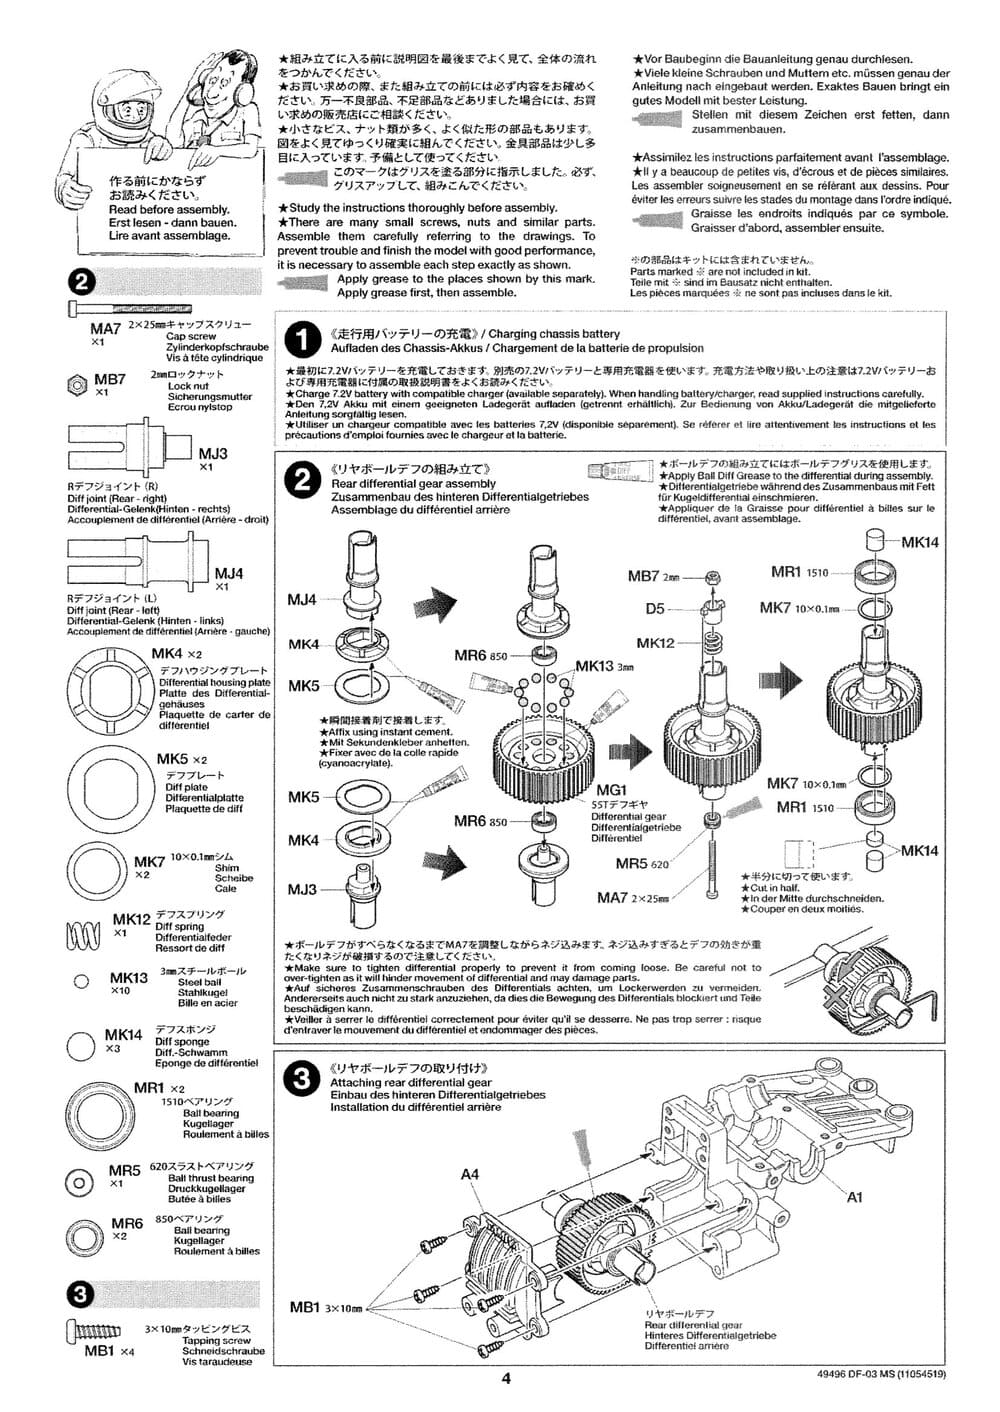 Tamiya - DF-03 MS Chassis Chassis - Manual - Page 4